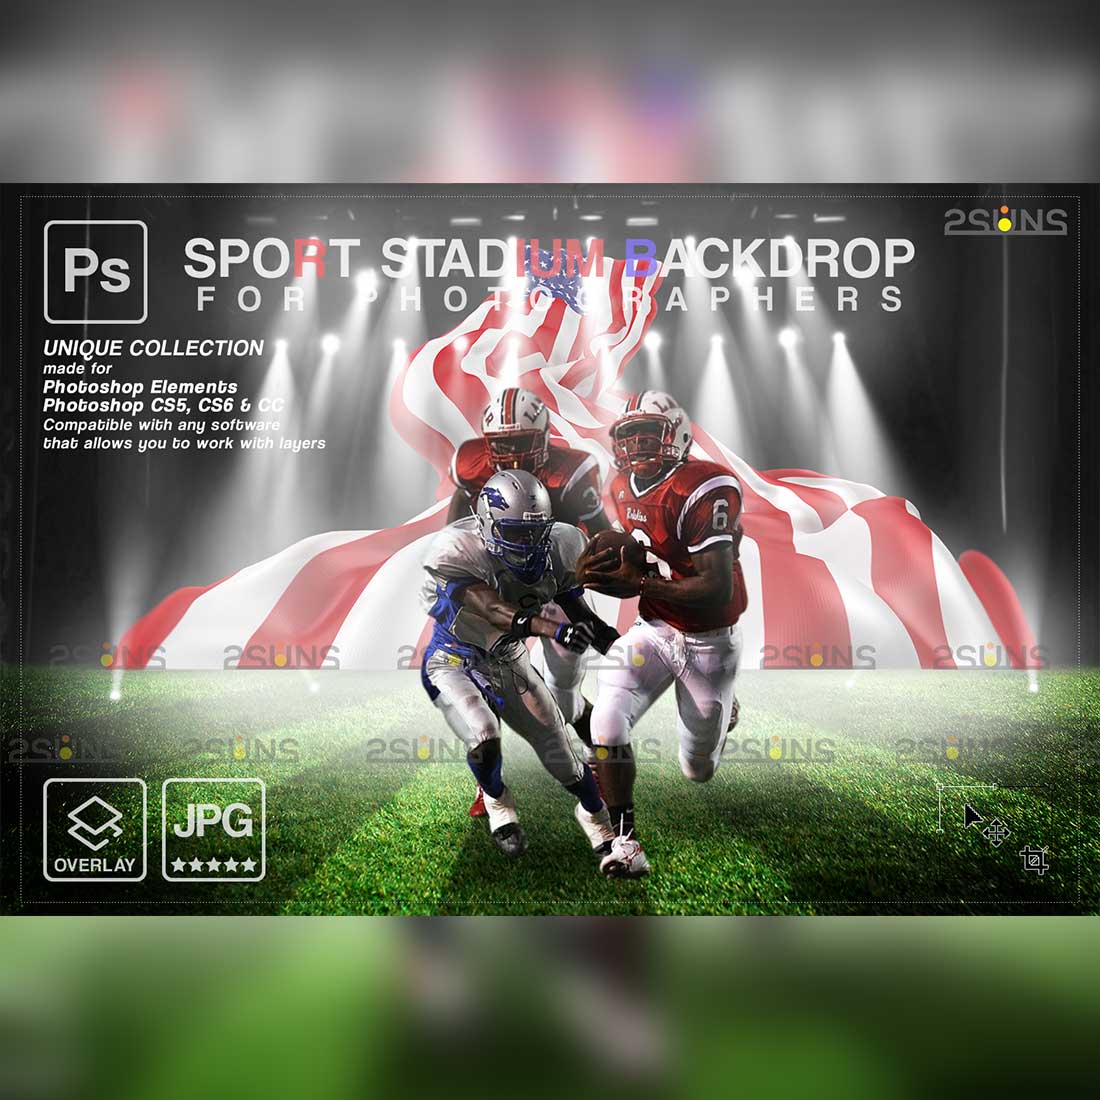 Football Stadium Backdrop Sports Digital Background Cover Image.